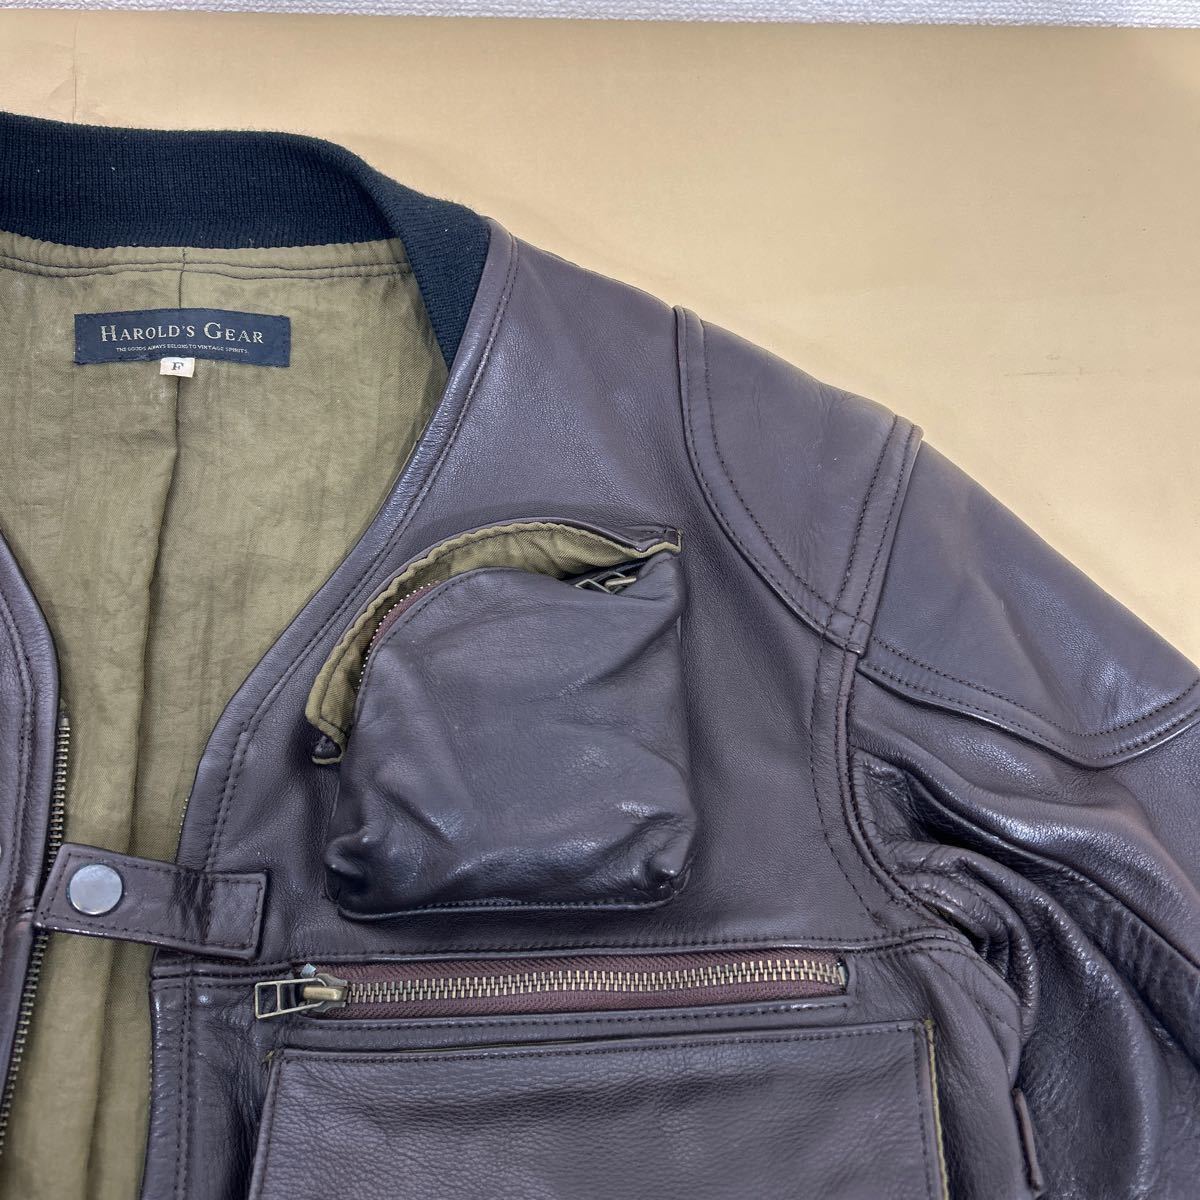 [ beautiful goods ]HAROLD\'S GEAR/ Halo ruz gear * very short height leather jacket free size brown group bike wear leather jacket 